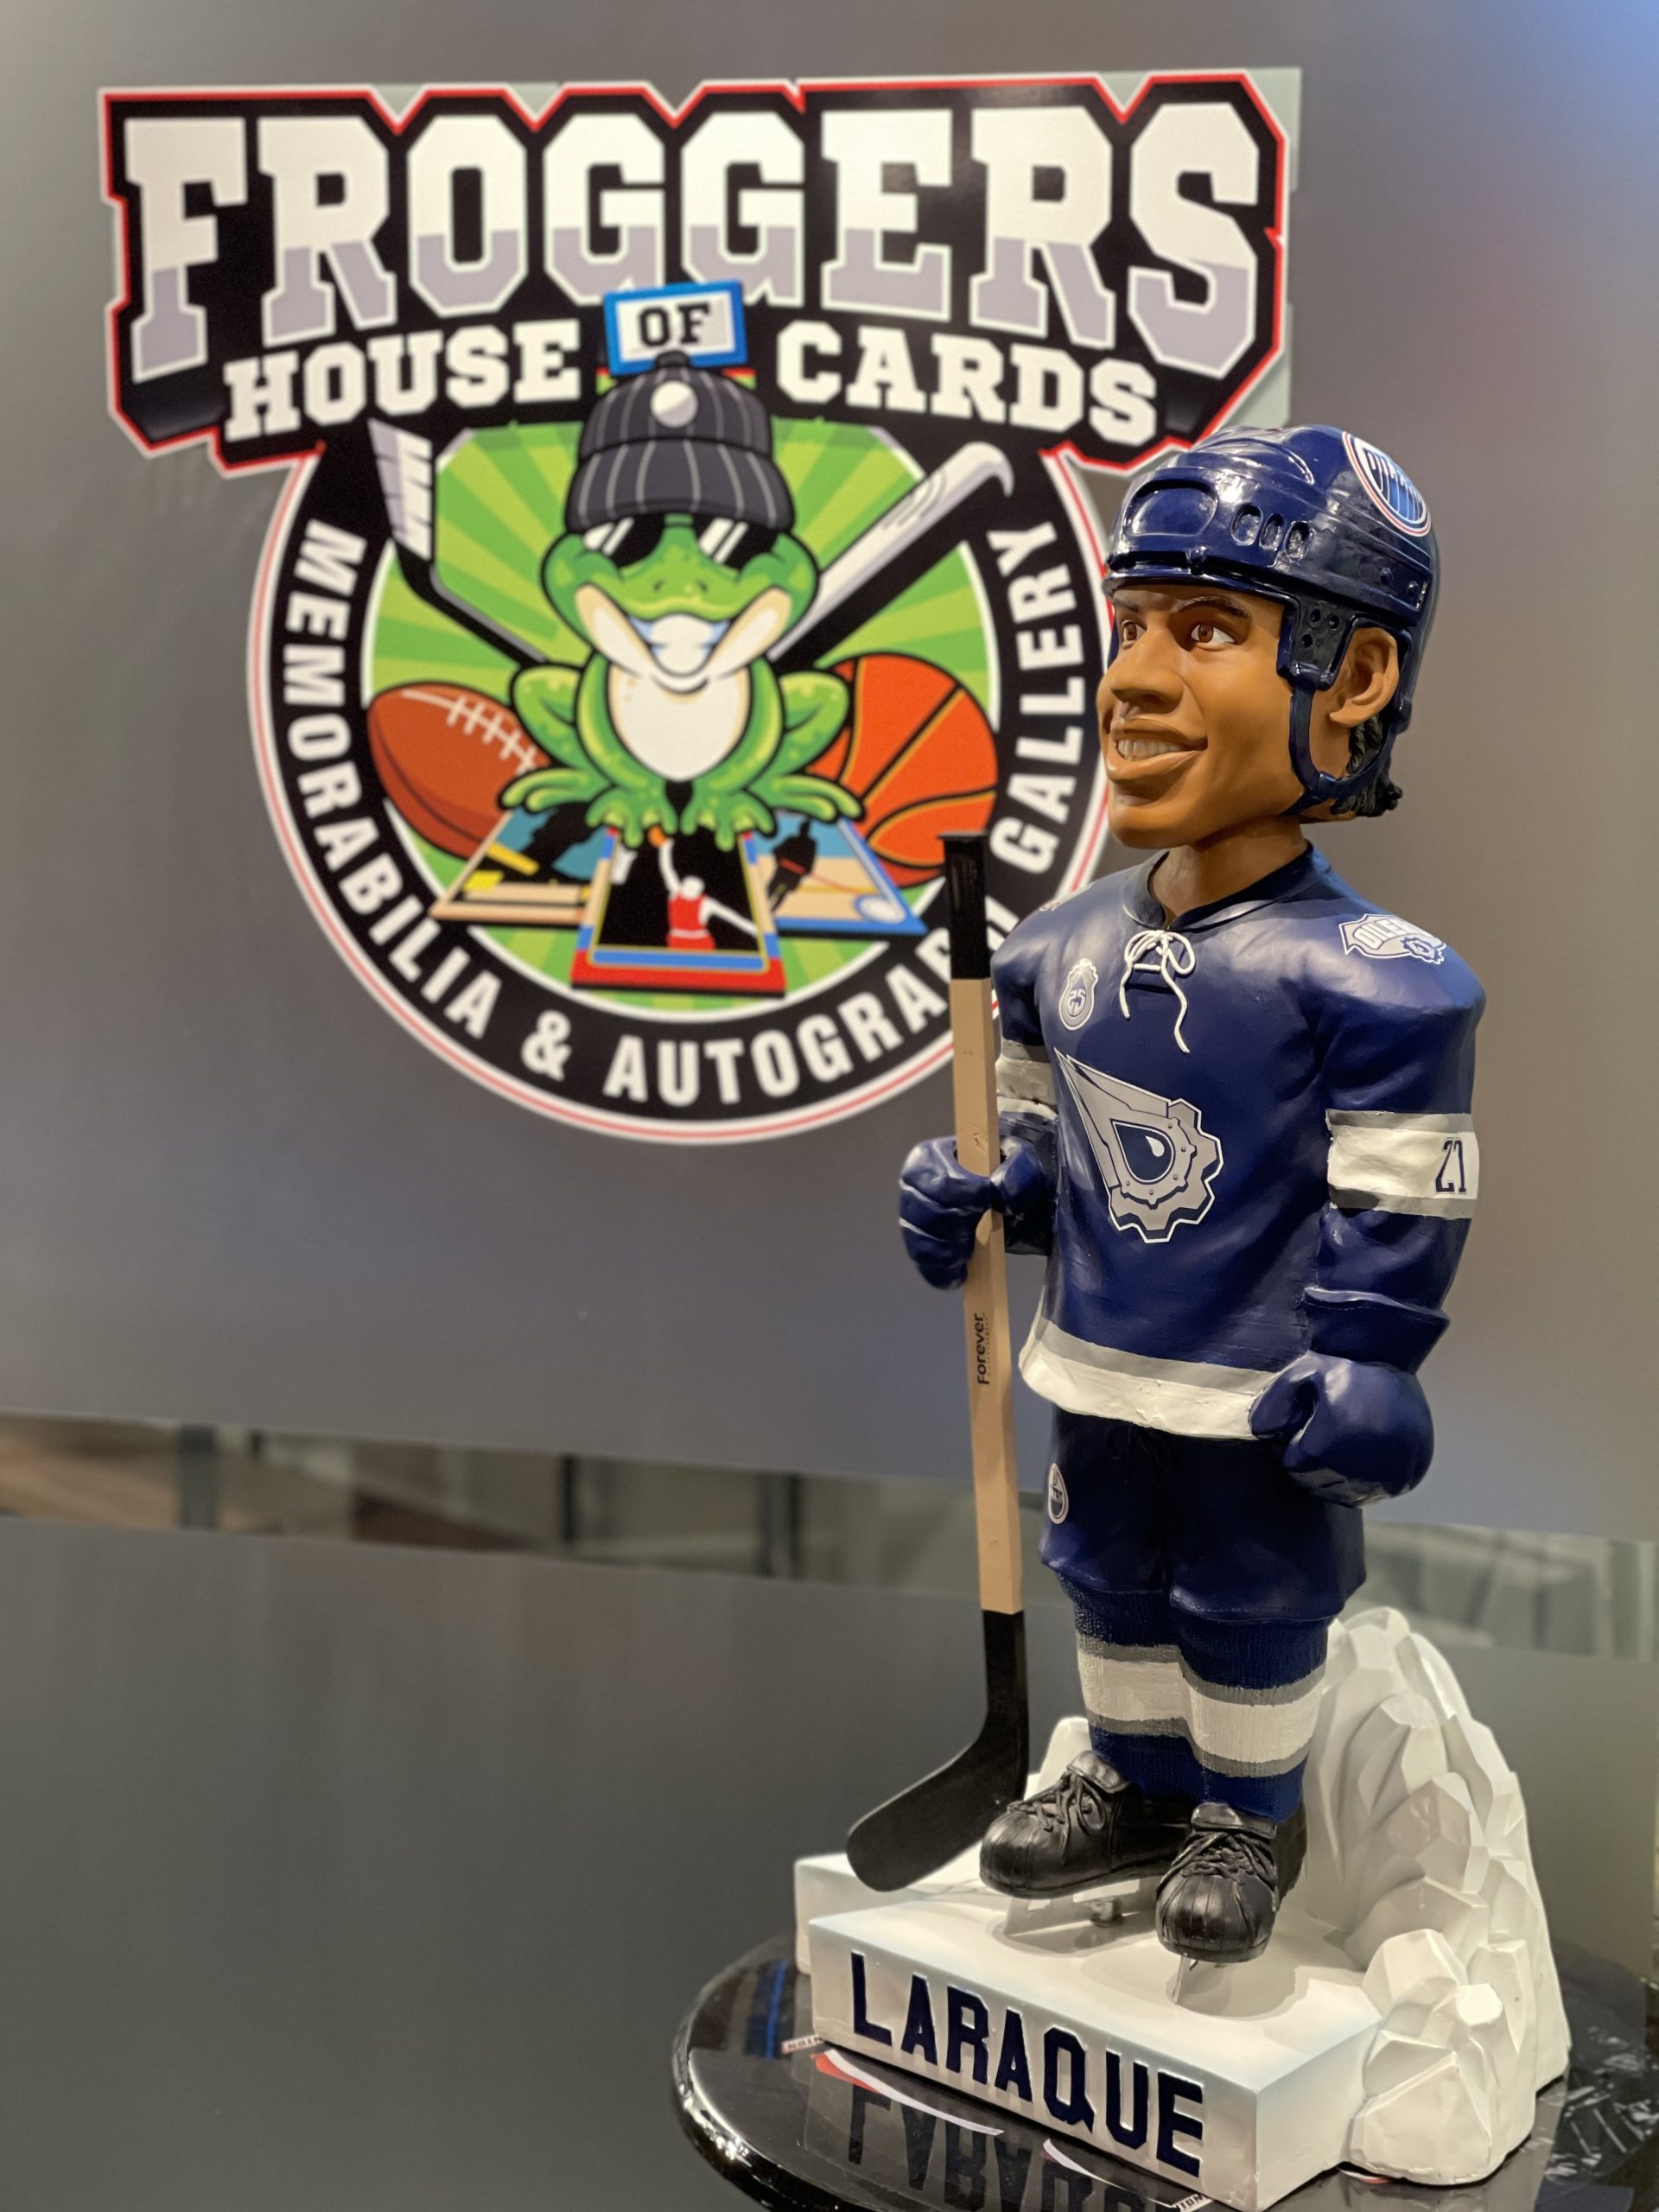 Hockey  Froggers House of Cards